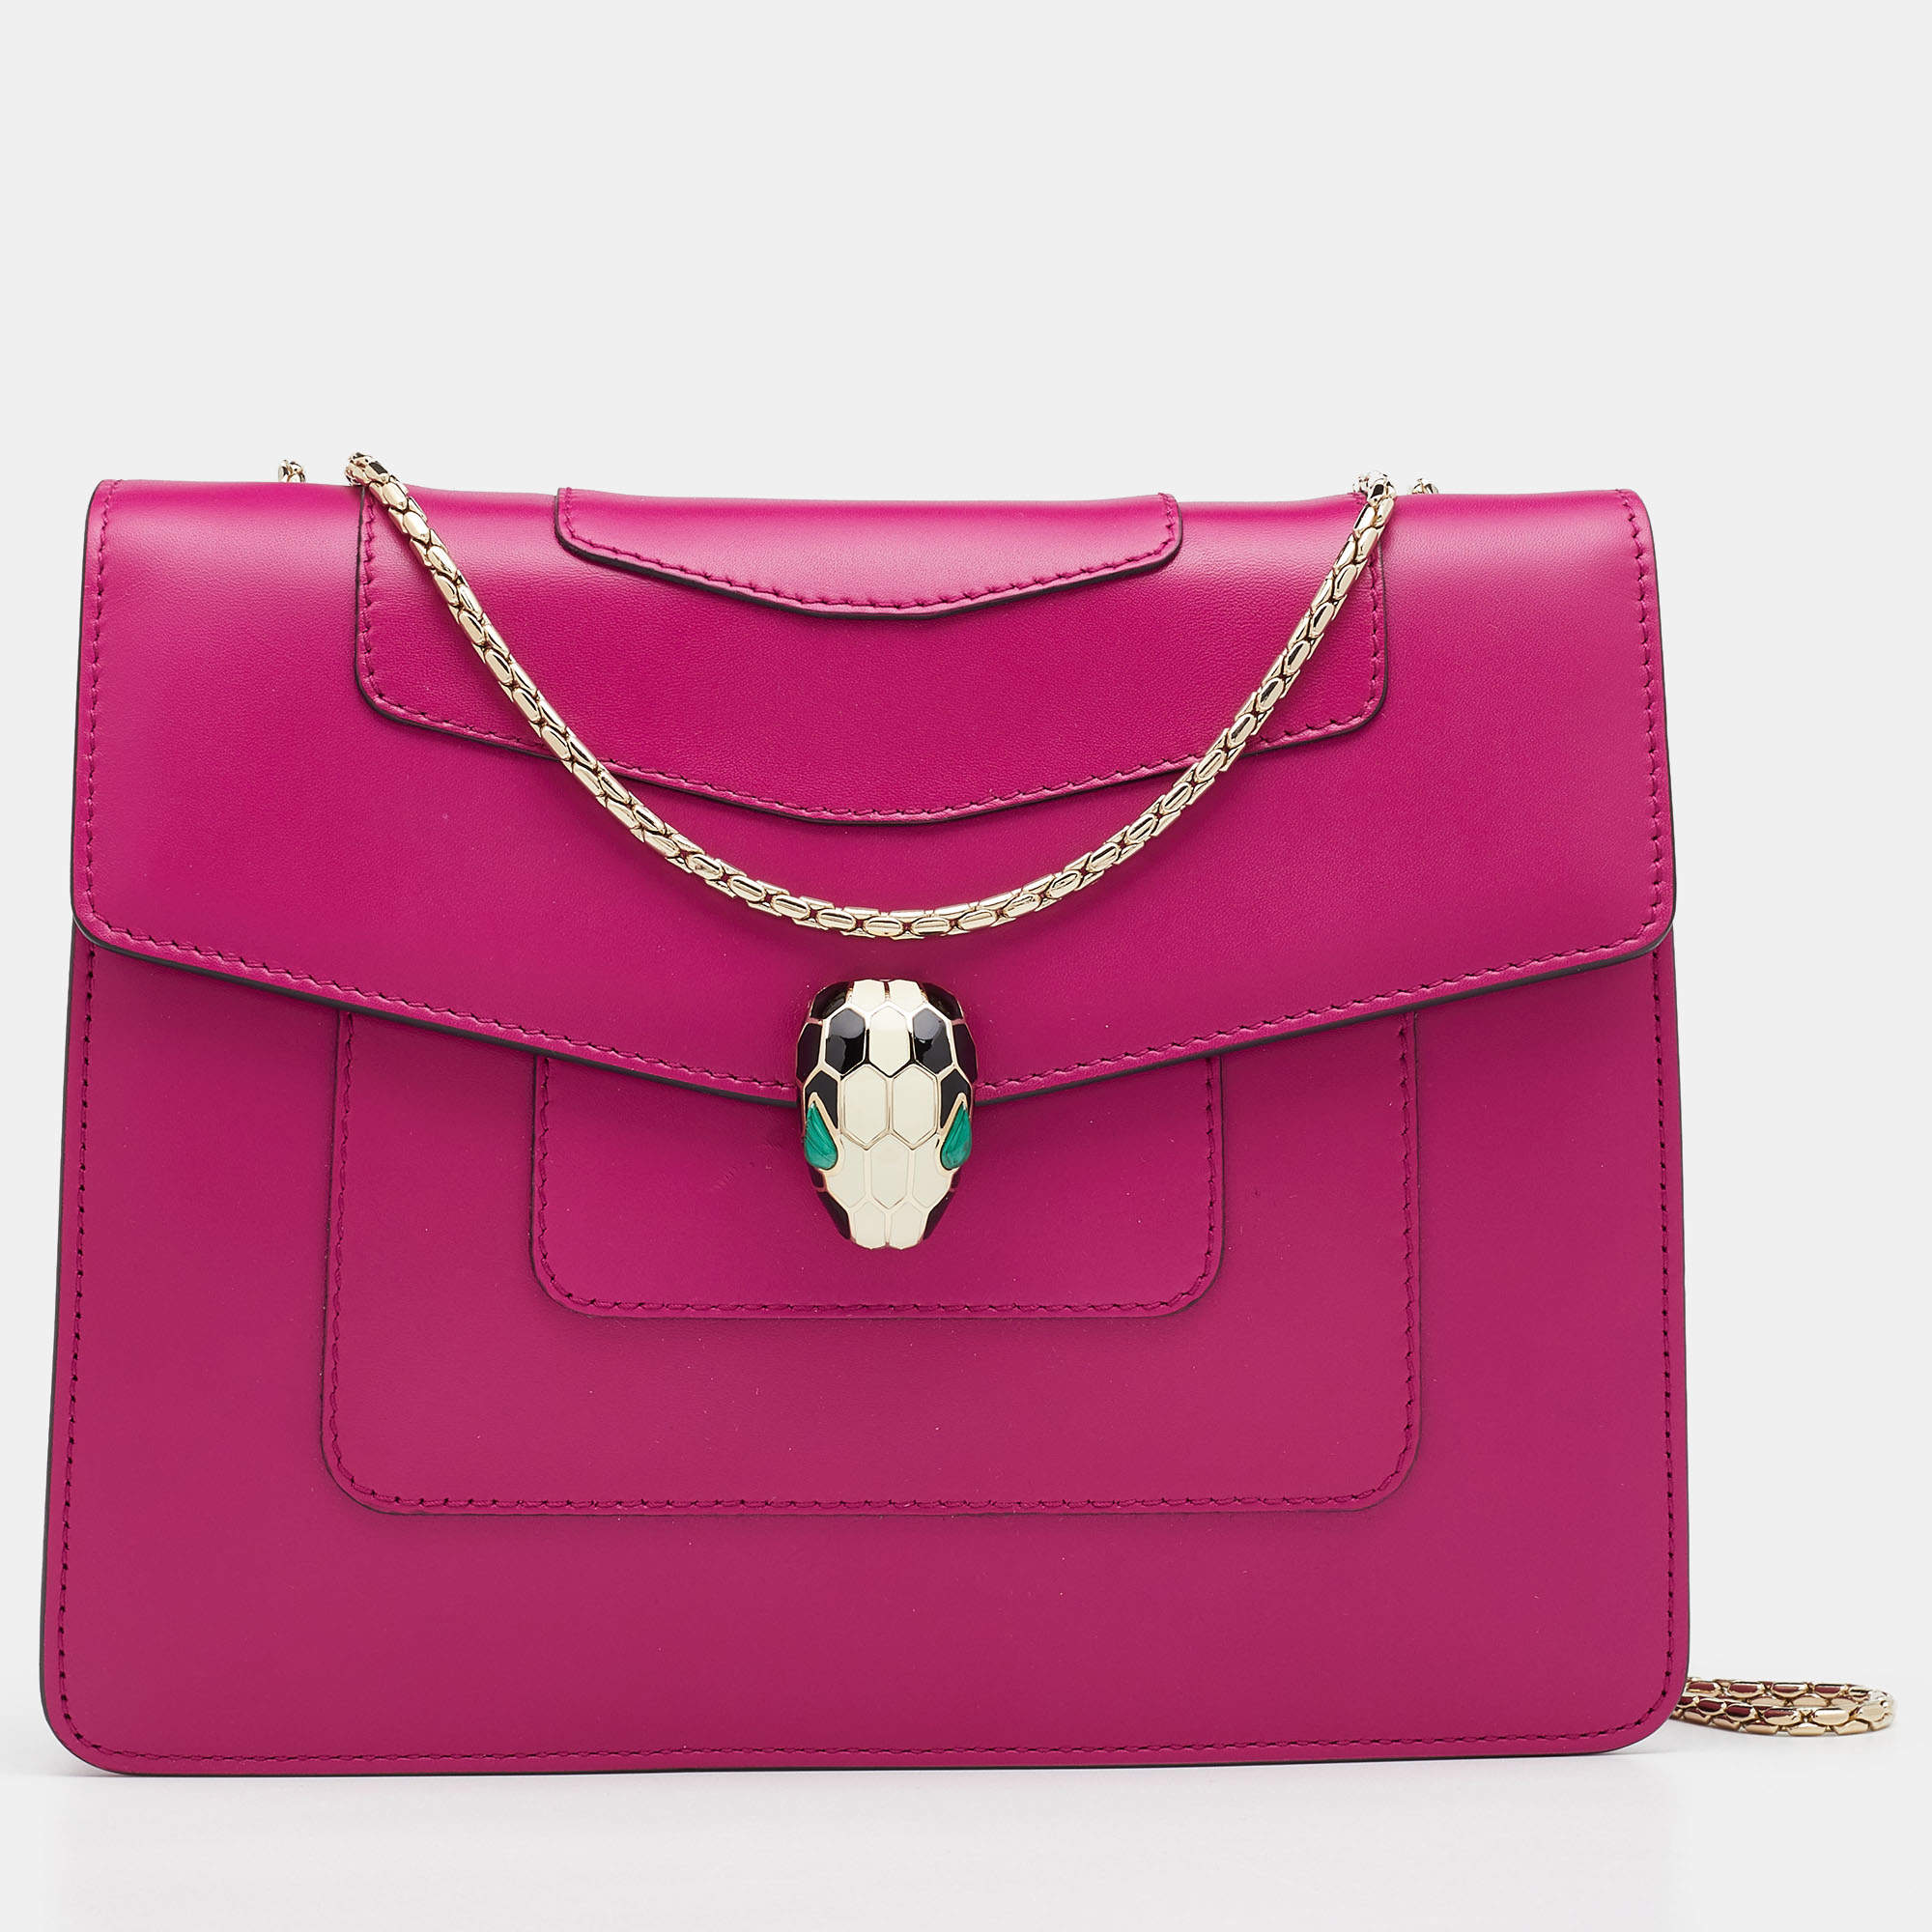 Bvlgari Serpenti Forever Shoulder Bag in Fuchsia Pink, Luxury